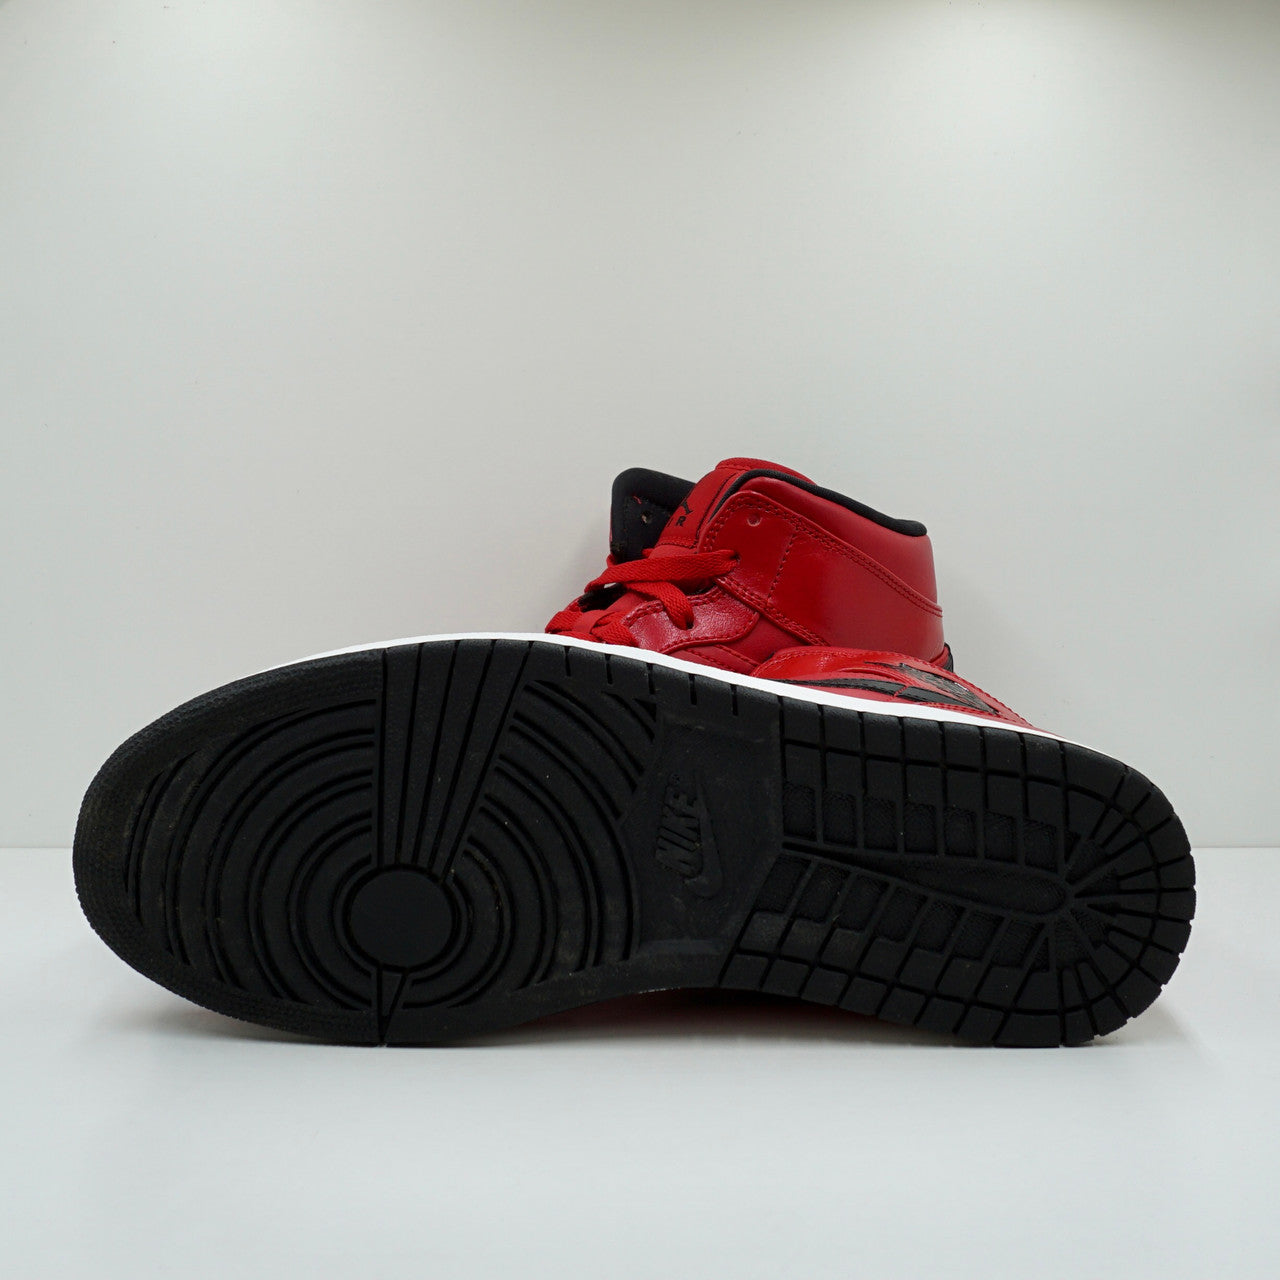 Jordan 1 Mid Gym Red Black Patent